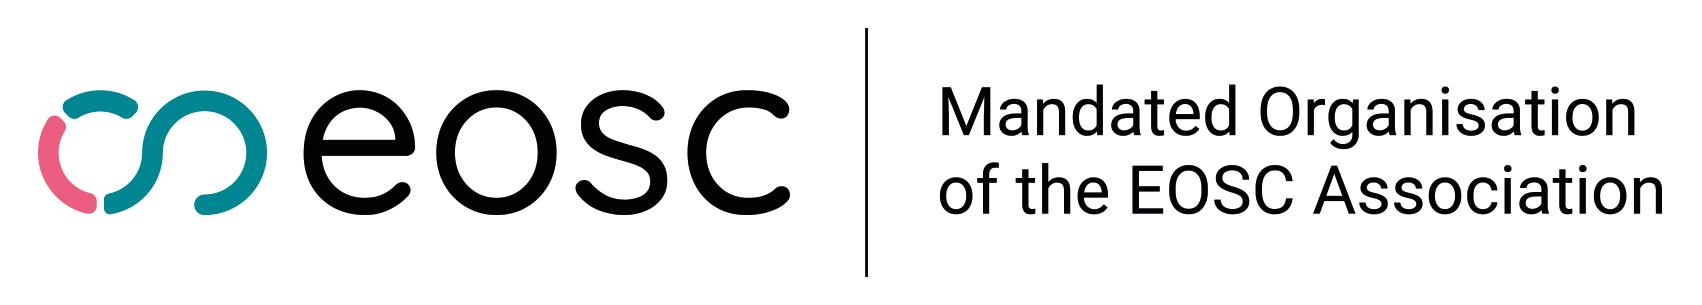 EOSC Mandated Organisation Logo